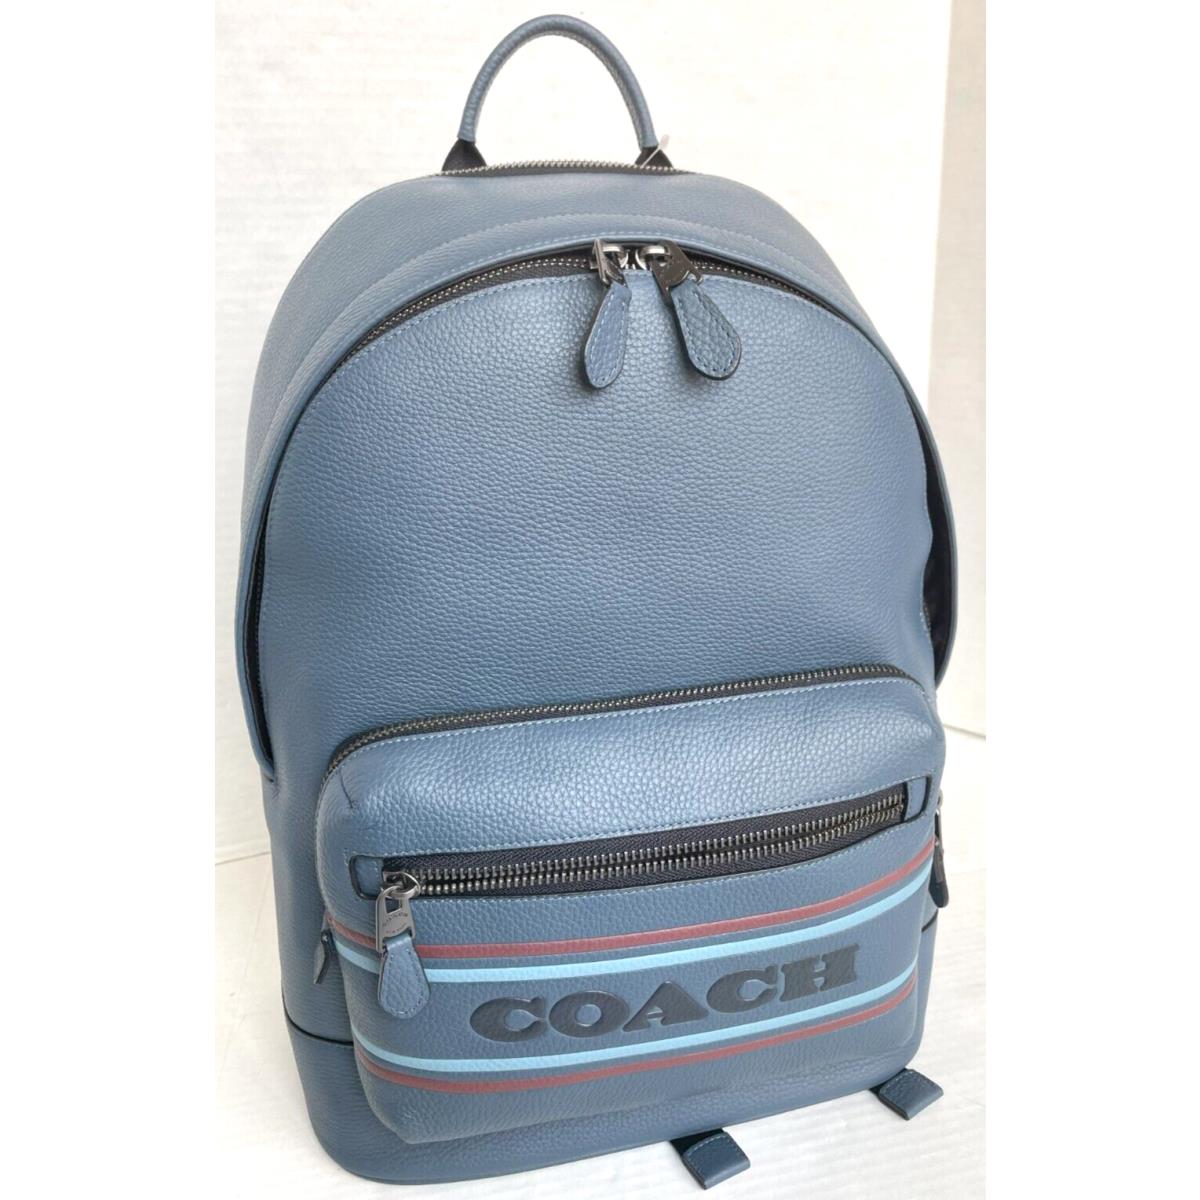 Coach West Leather Backpack Denim Multi Stripe/CG995/$598/NWT